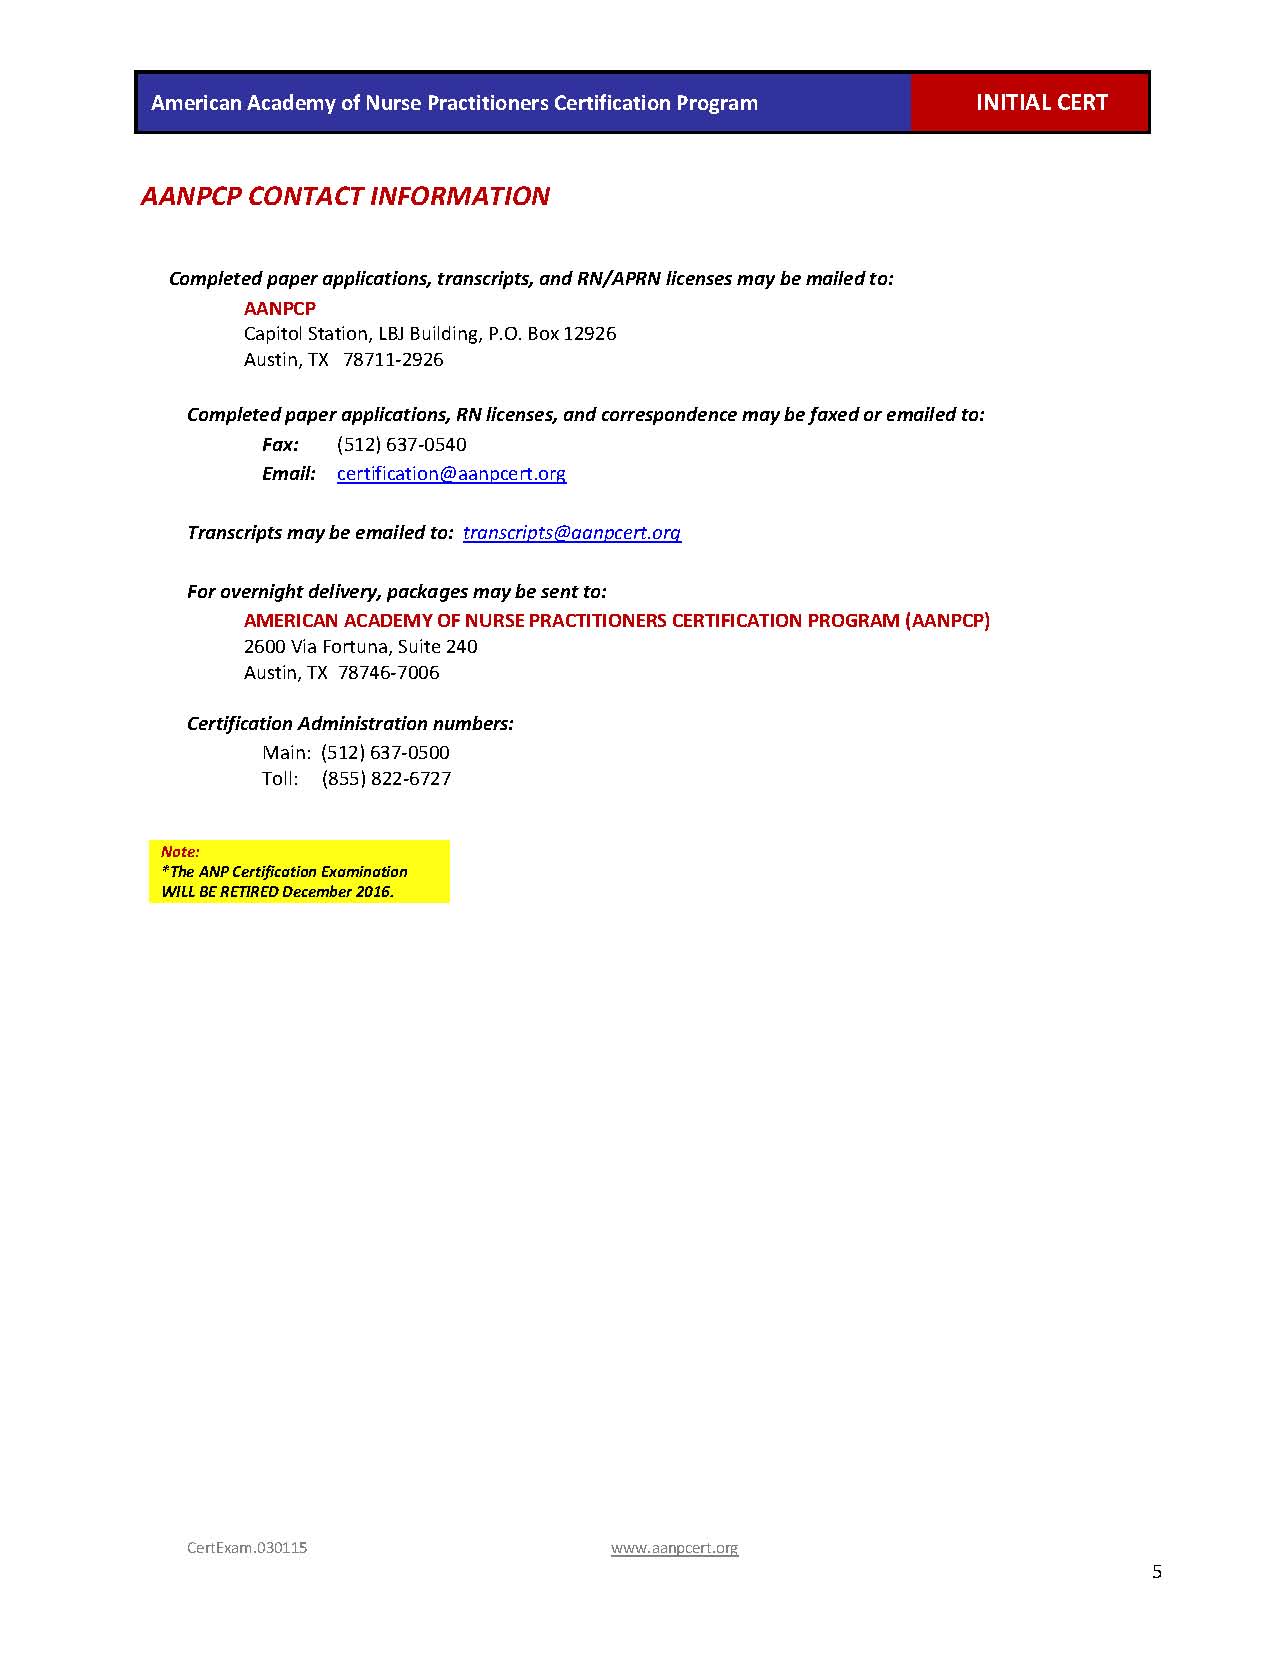 AANP Certification Exam App_Page_5.jpg